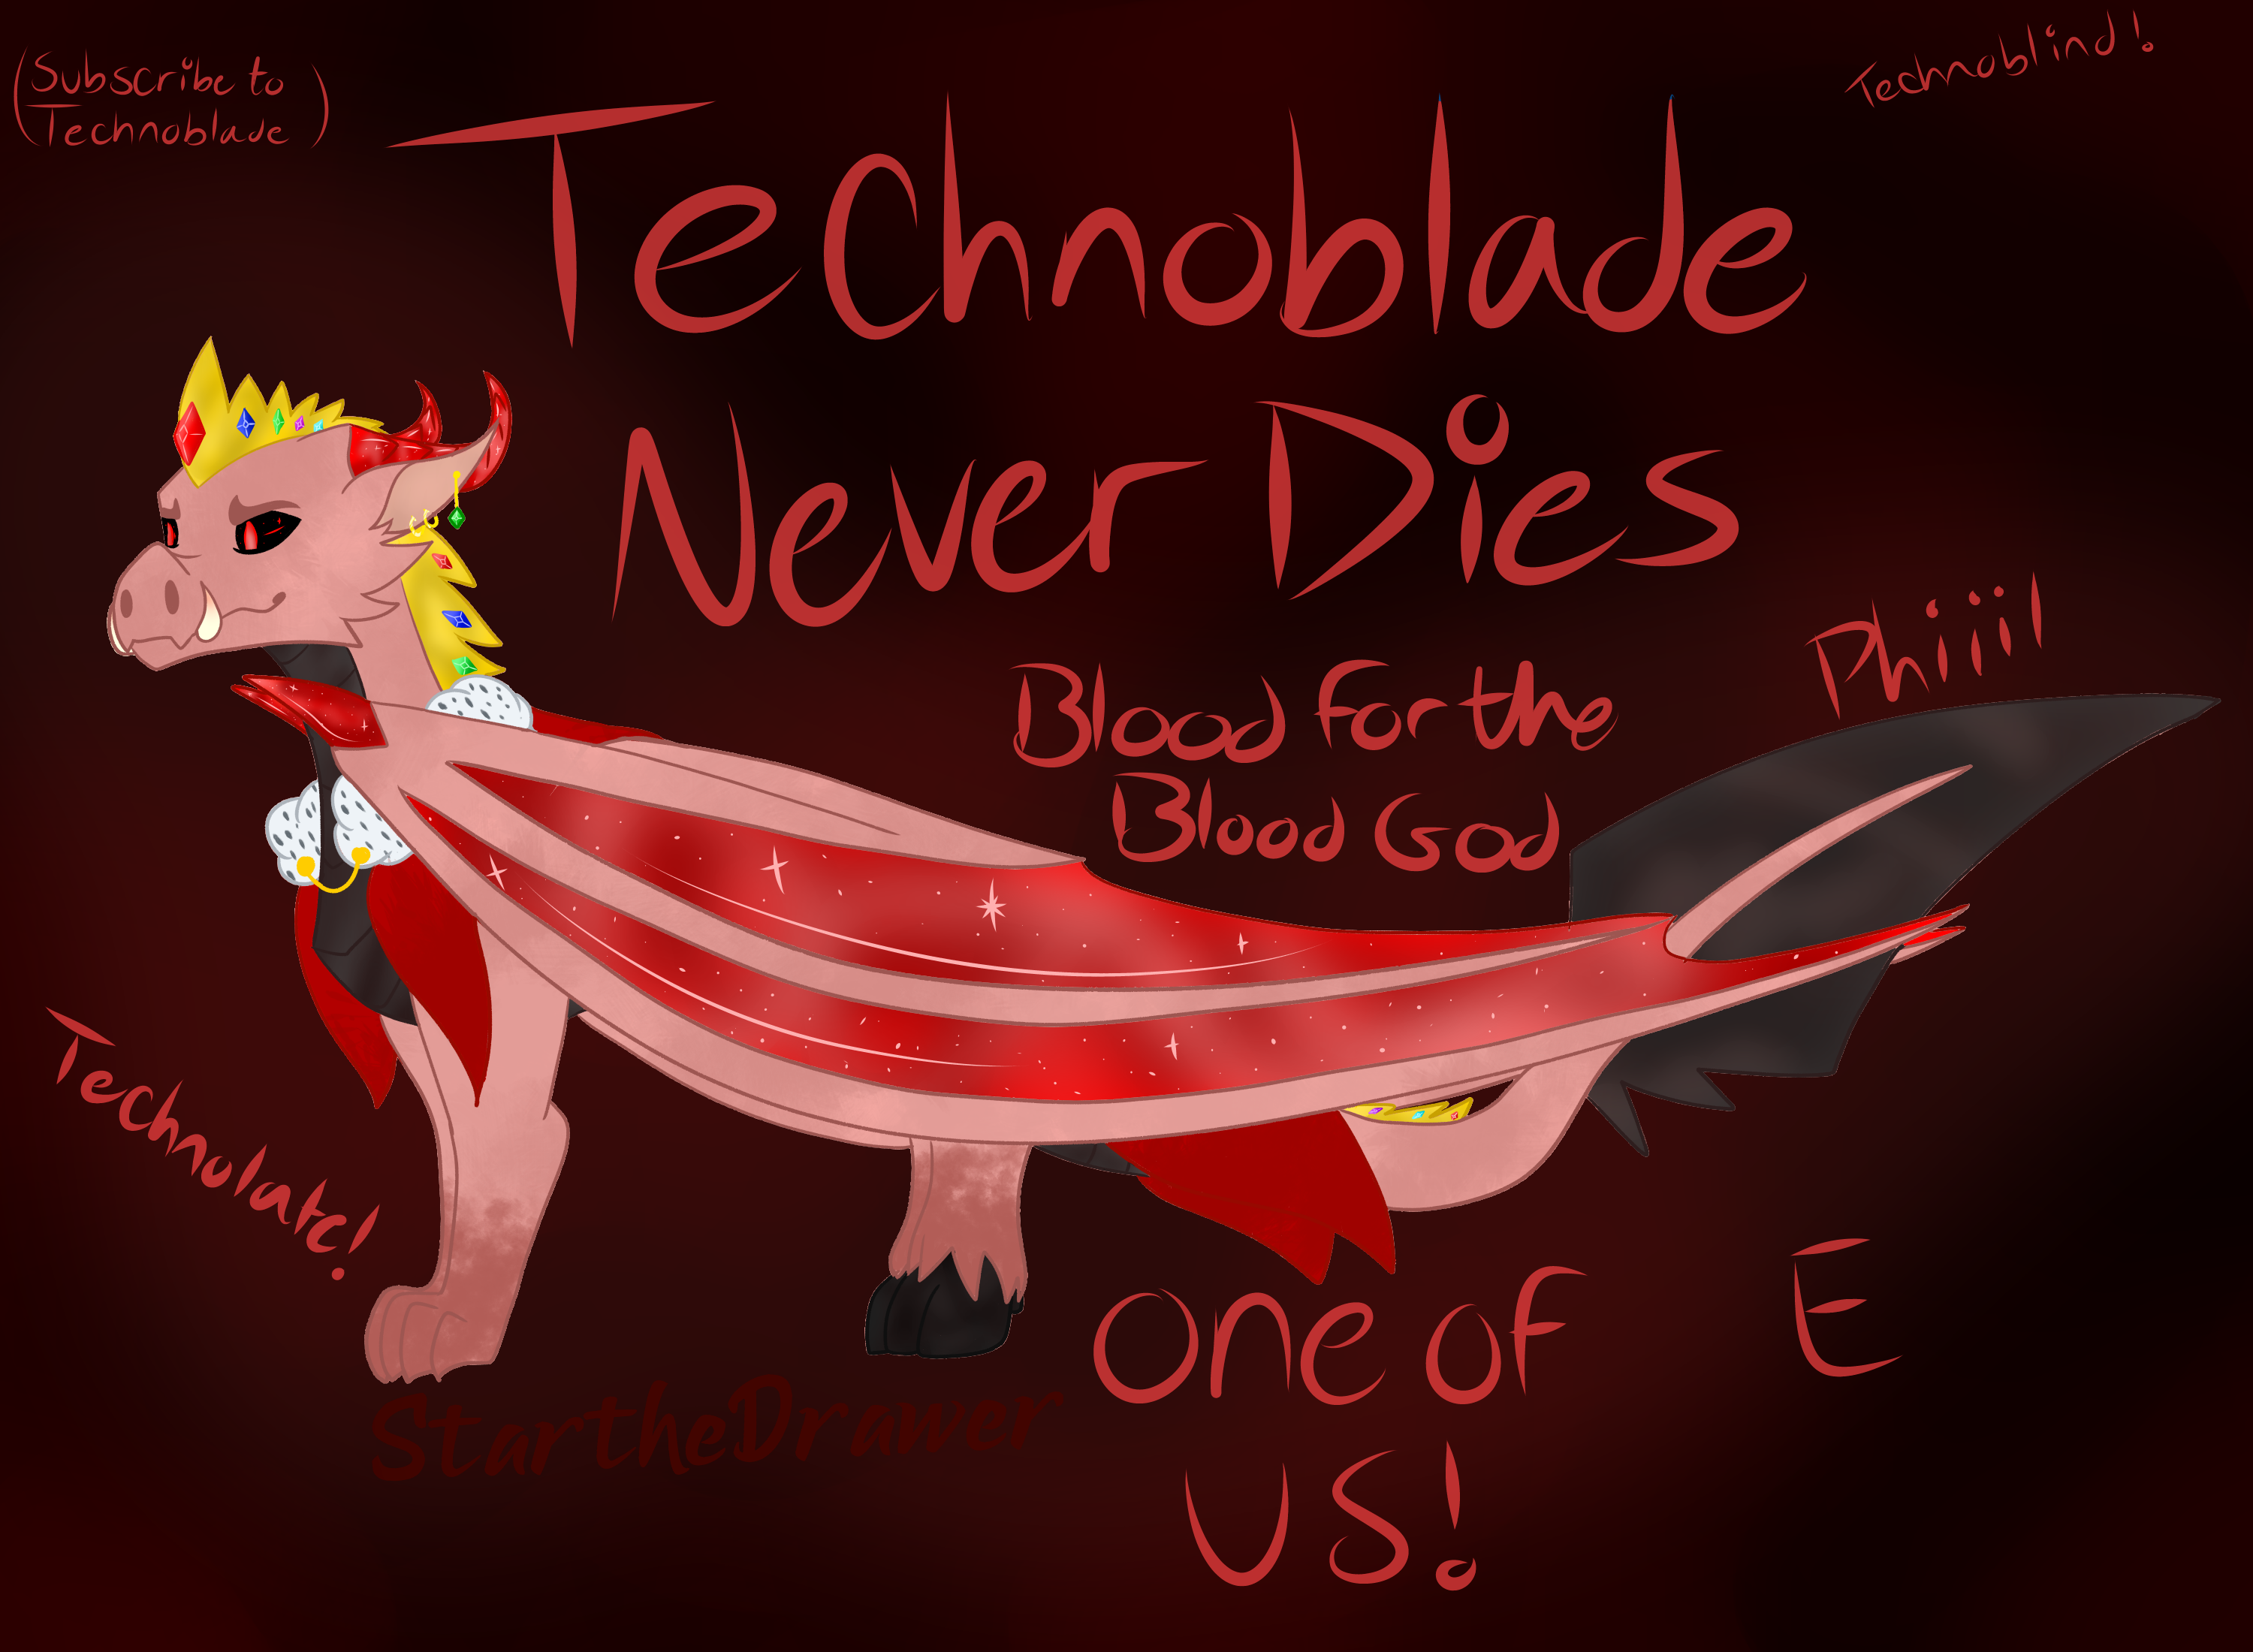 Technoblade never dies by Silvergrovedragon on DeviantArt